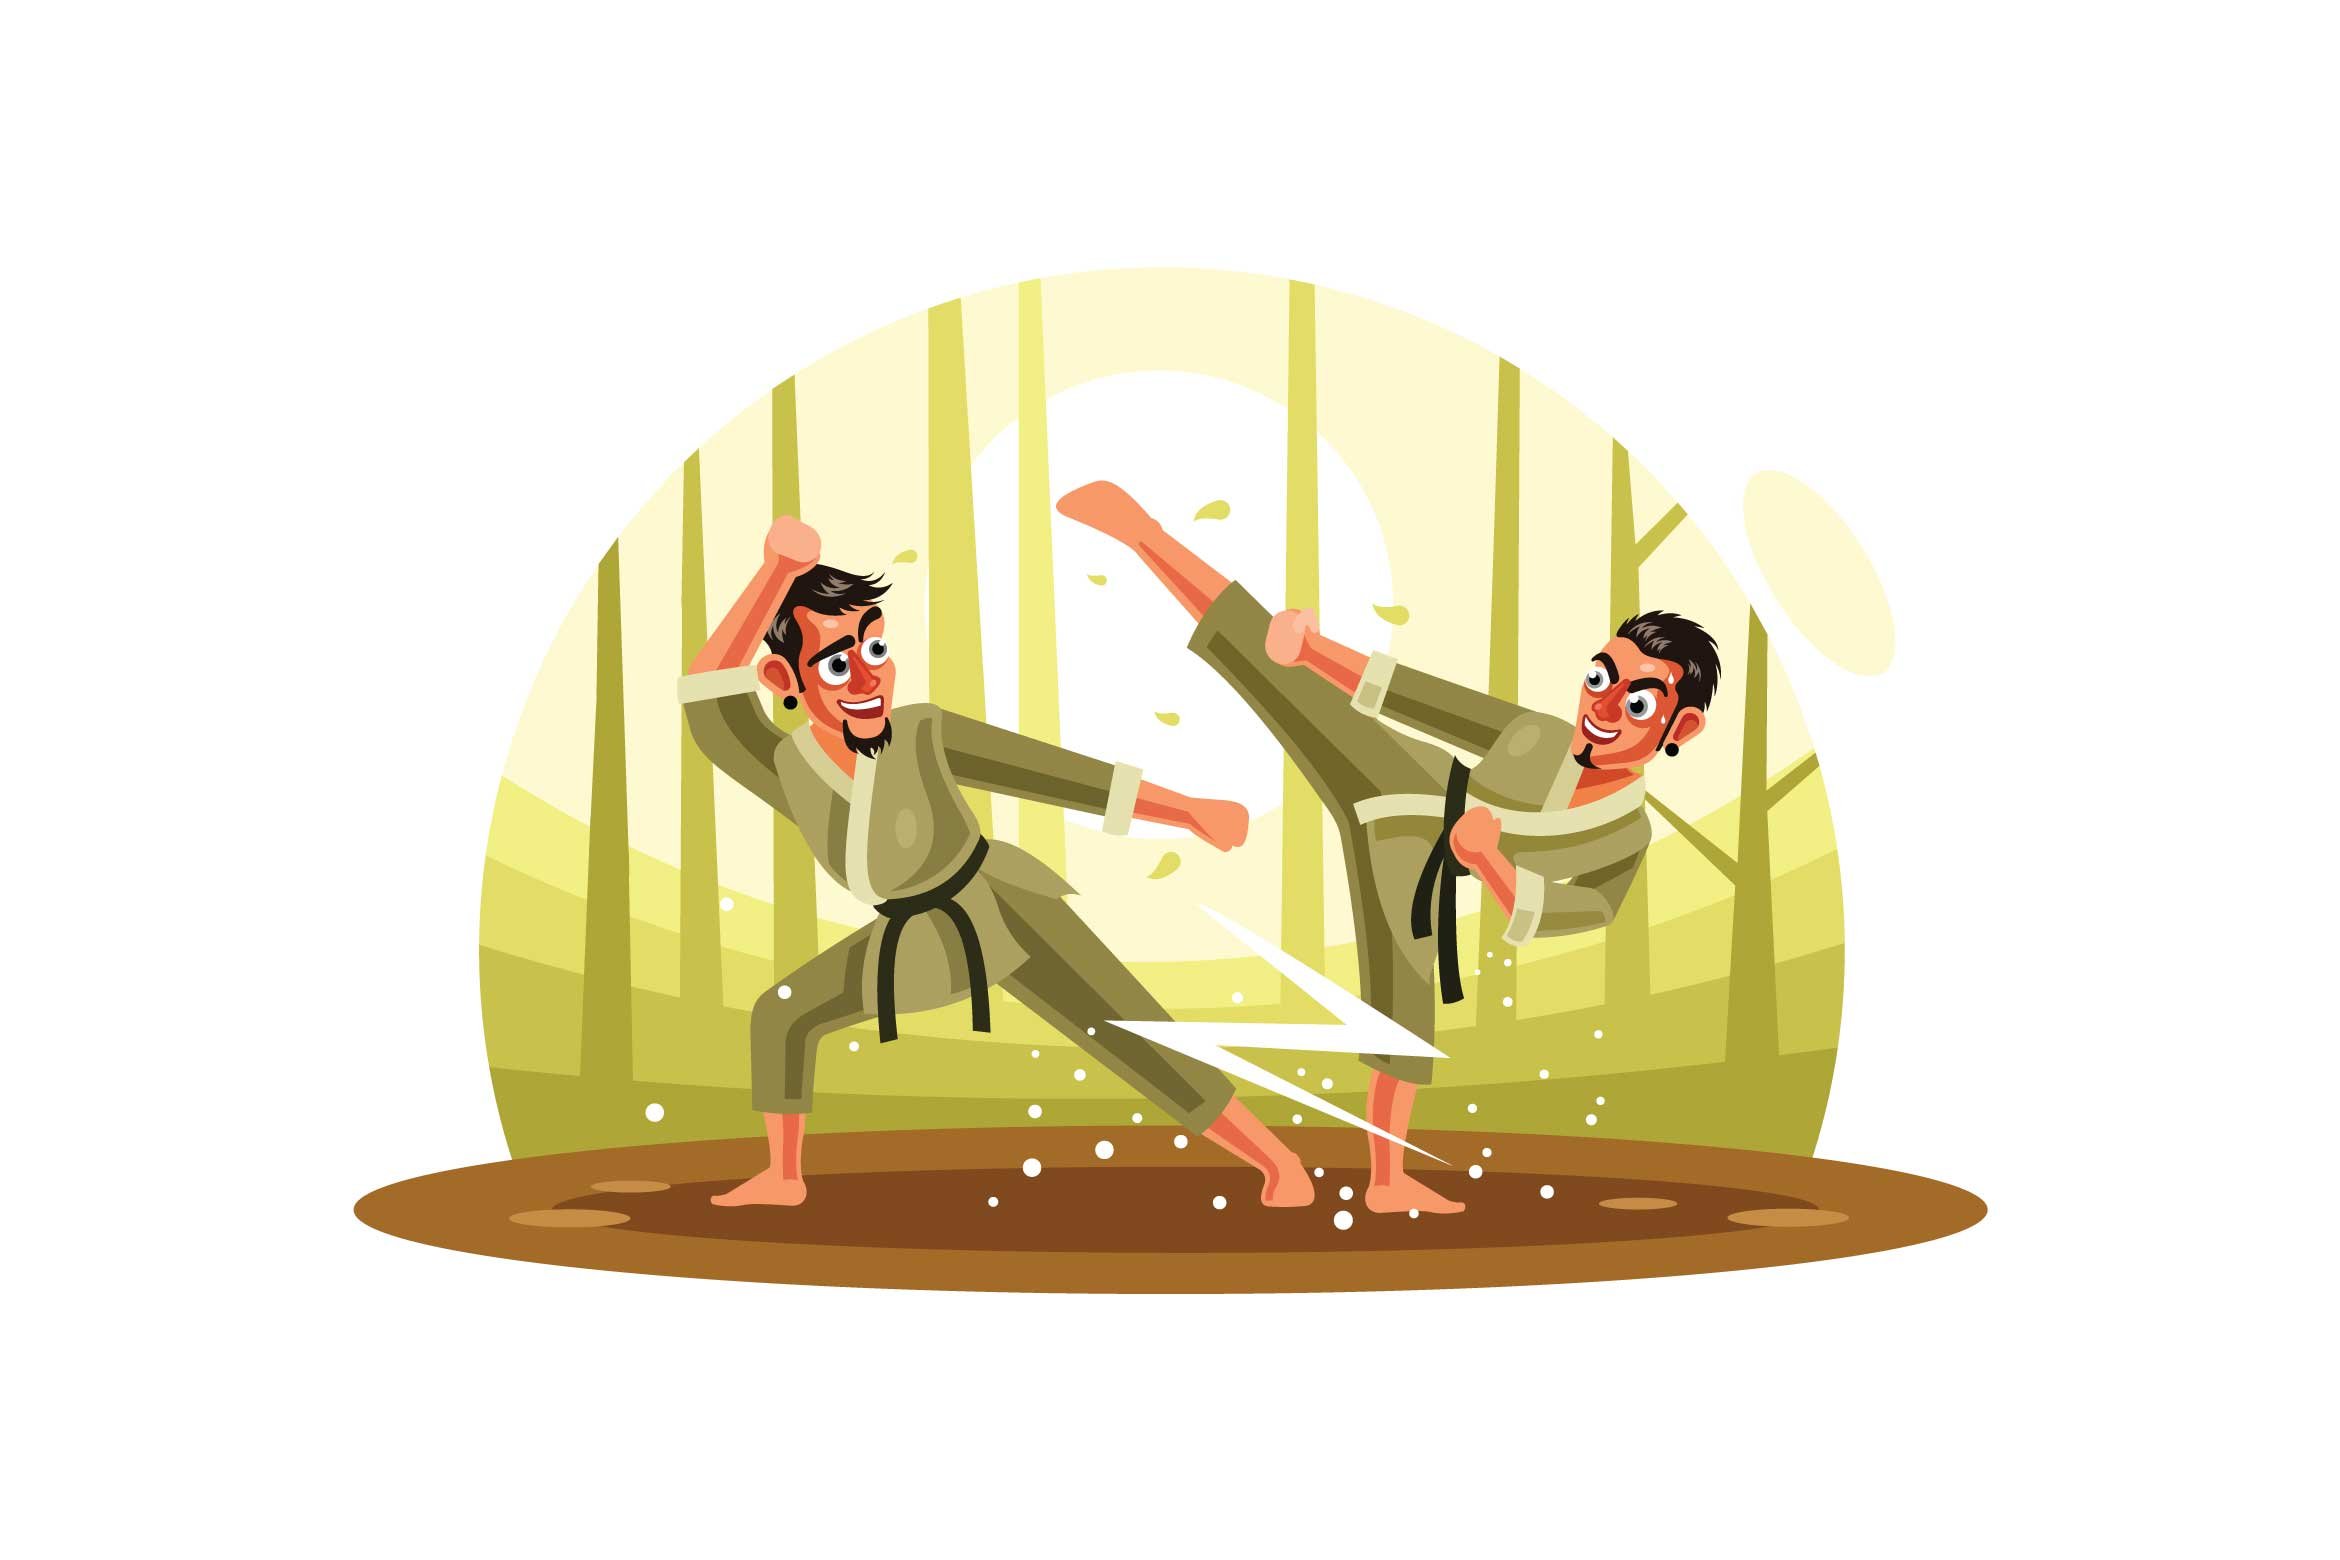 Karate Fighter Vector Illustration cover image.